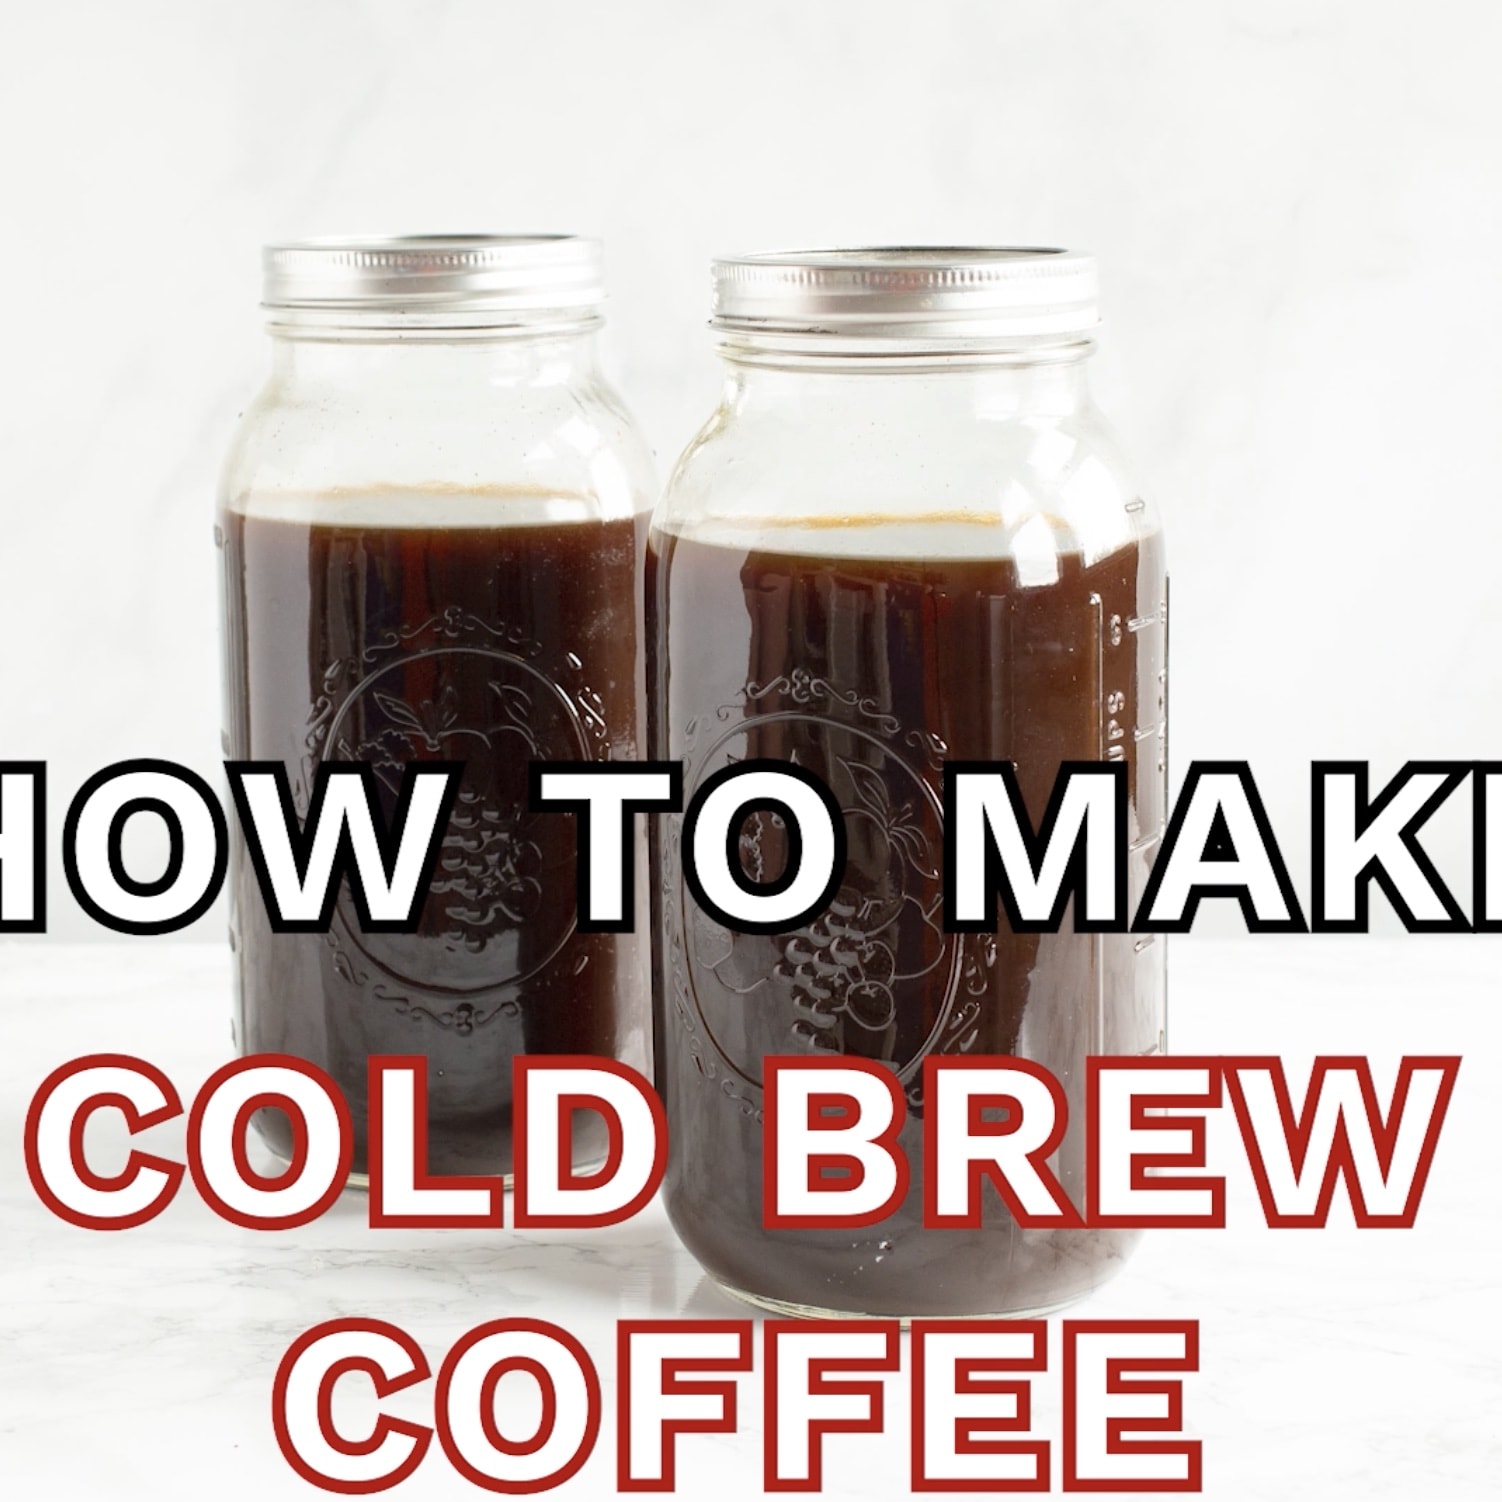 How To Make Iced Coffee - The Gunny Sack